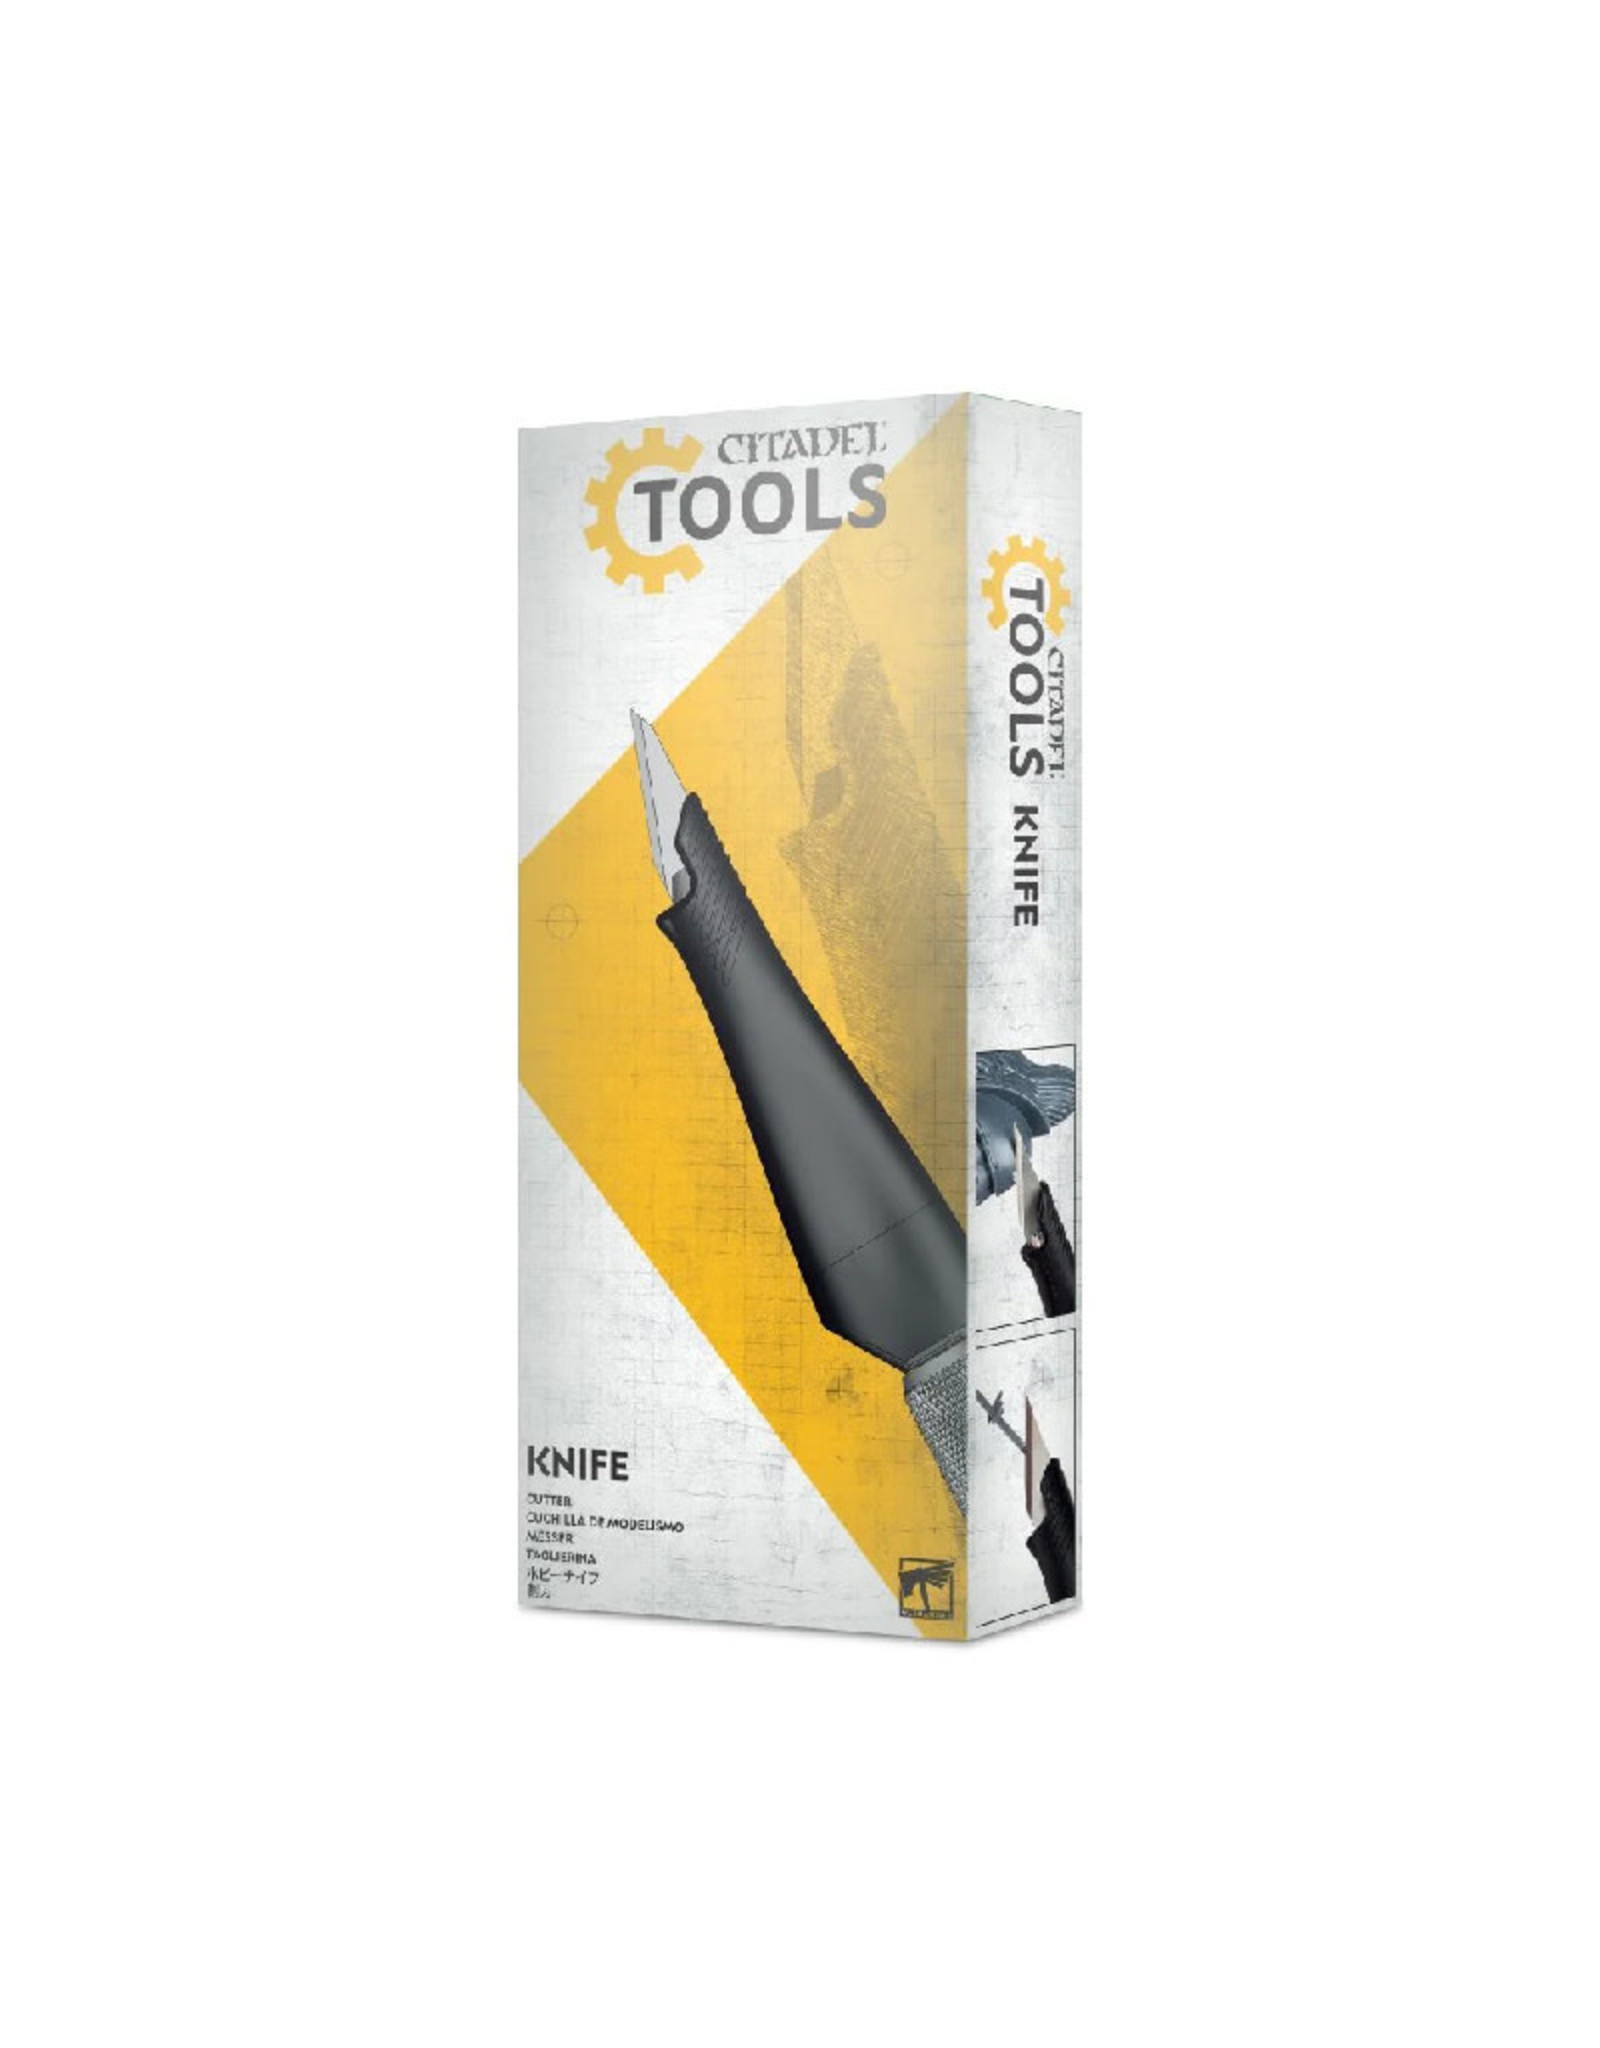 Games Workshop Tool: Citadel Hobby Knife